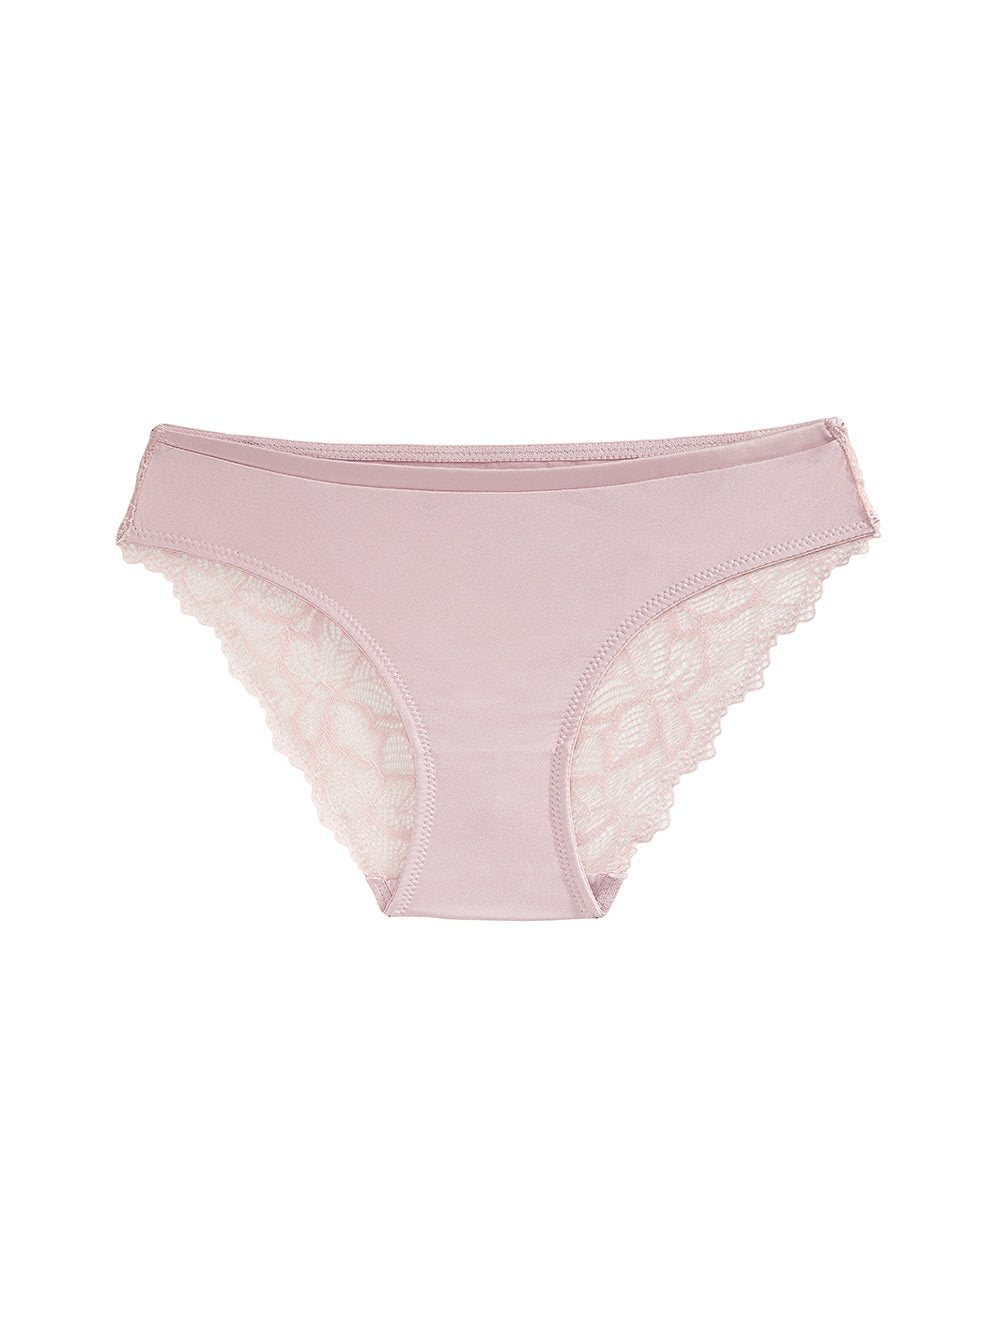 Heather Petite Lace Back Panty PT002 - Blush